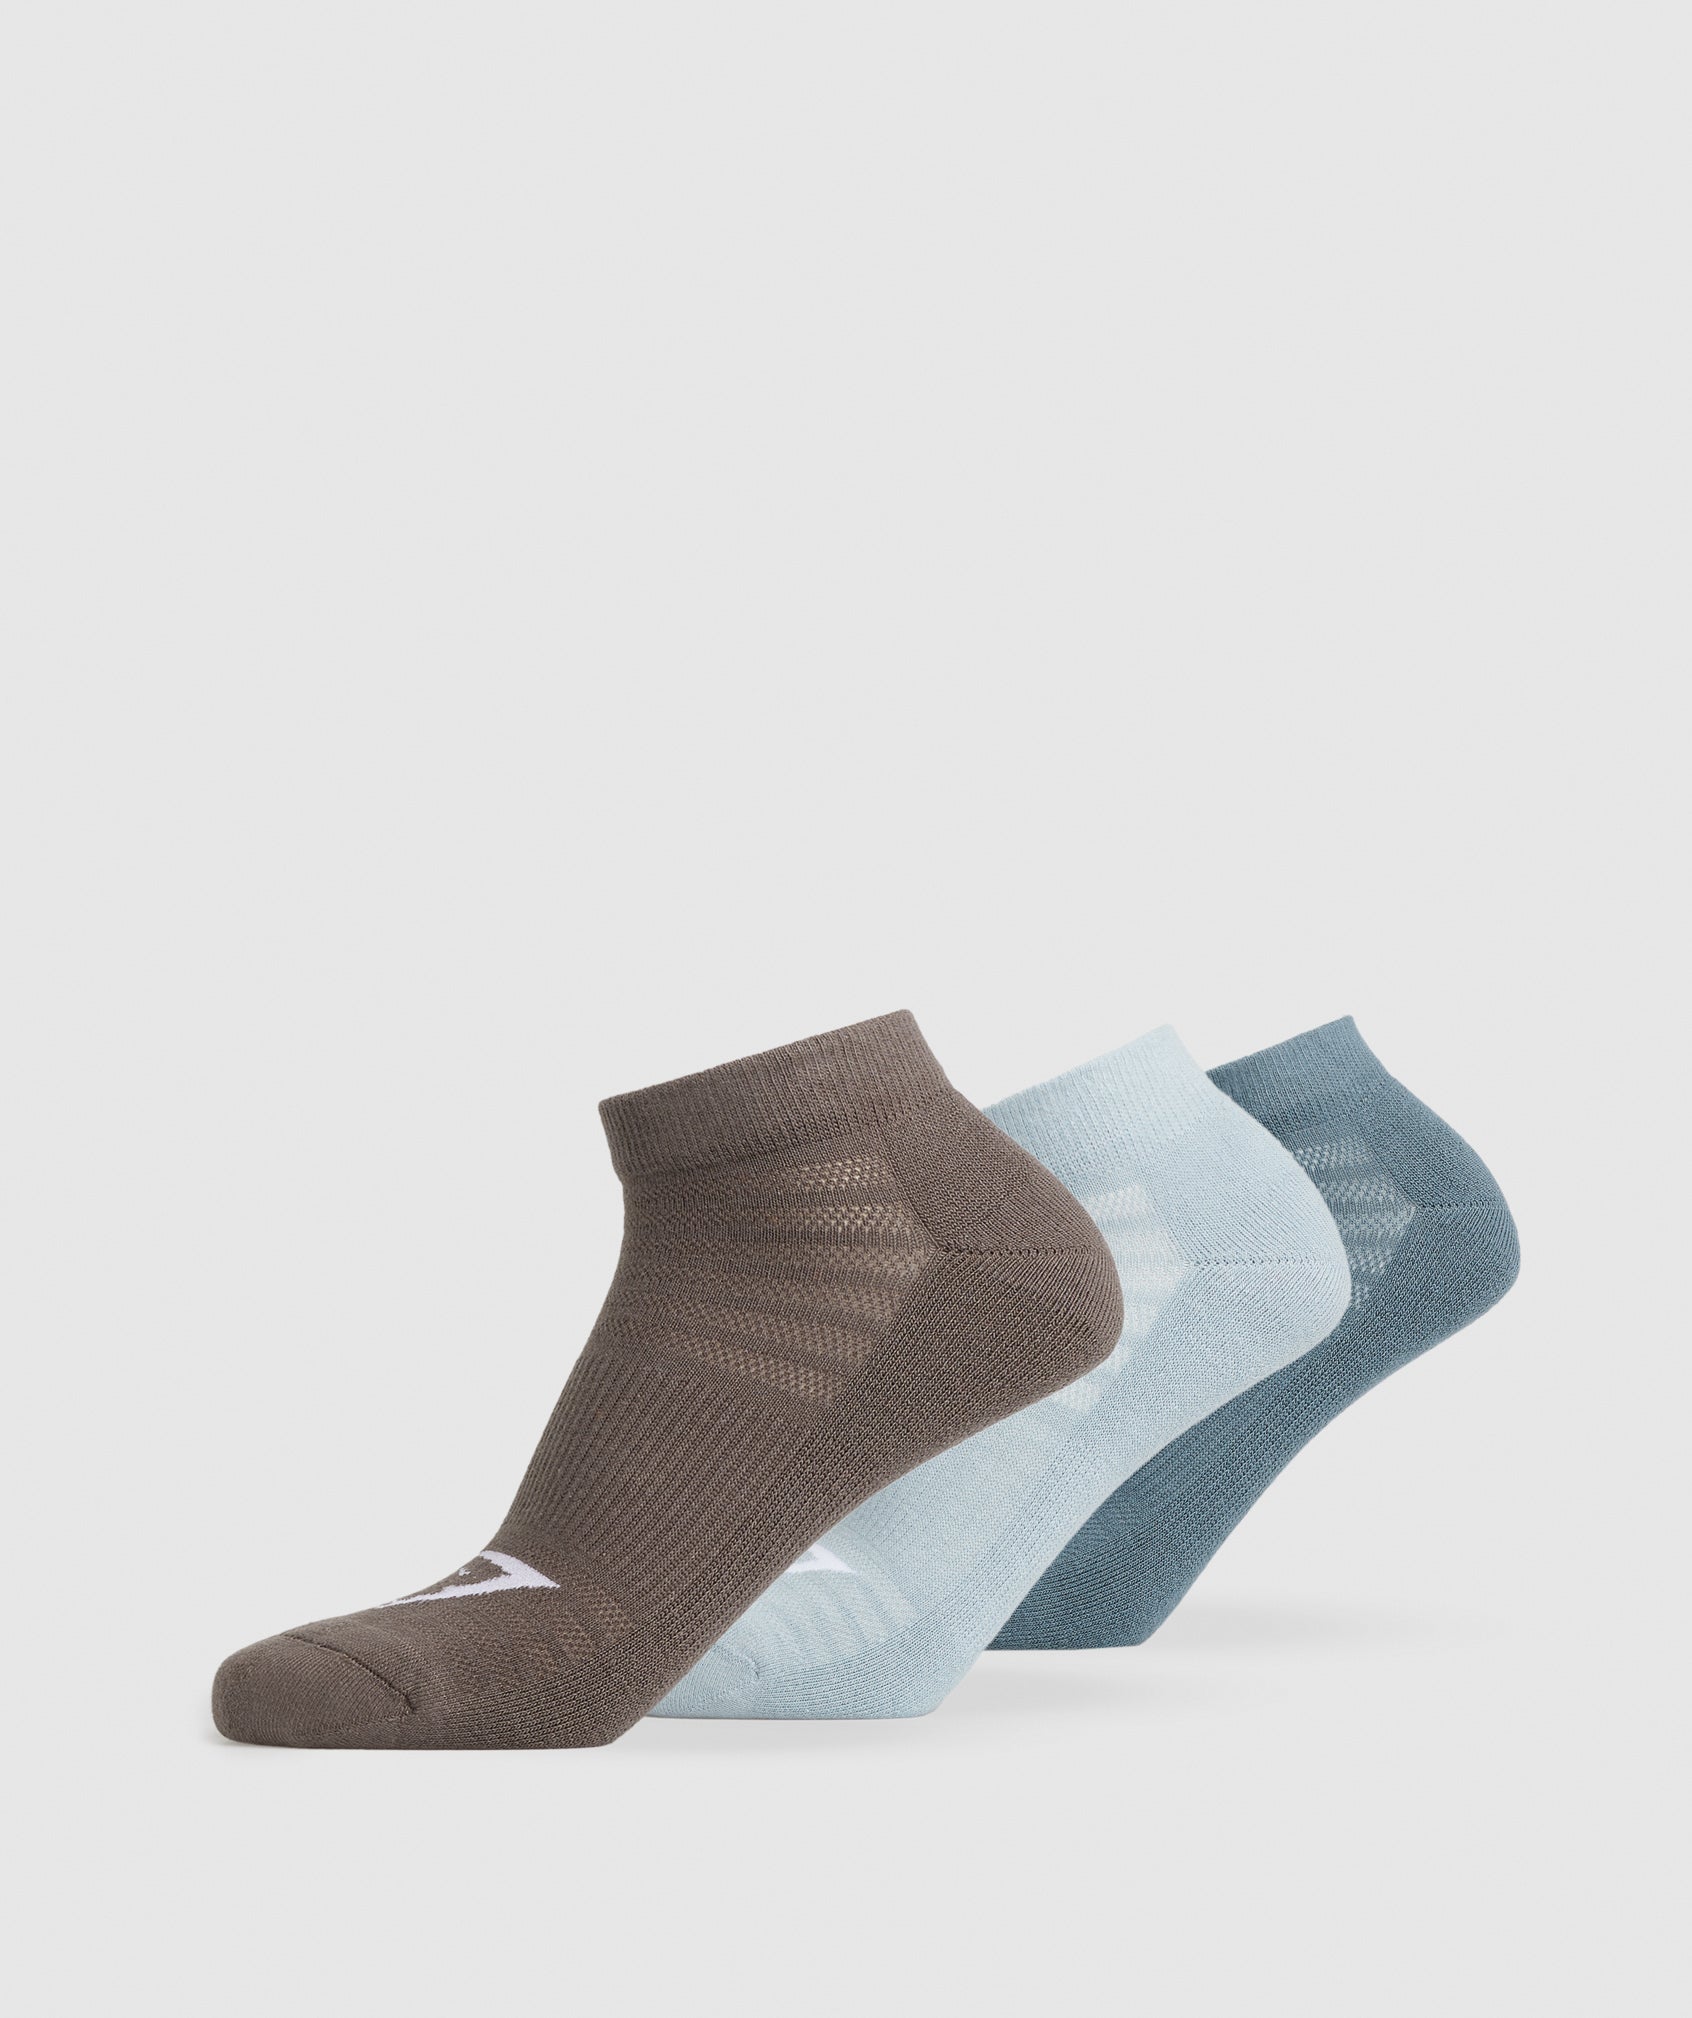 Ankle Socks 3pk in Denim Teal/Salt Blue/Camo Brown